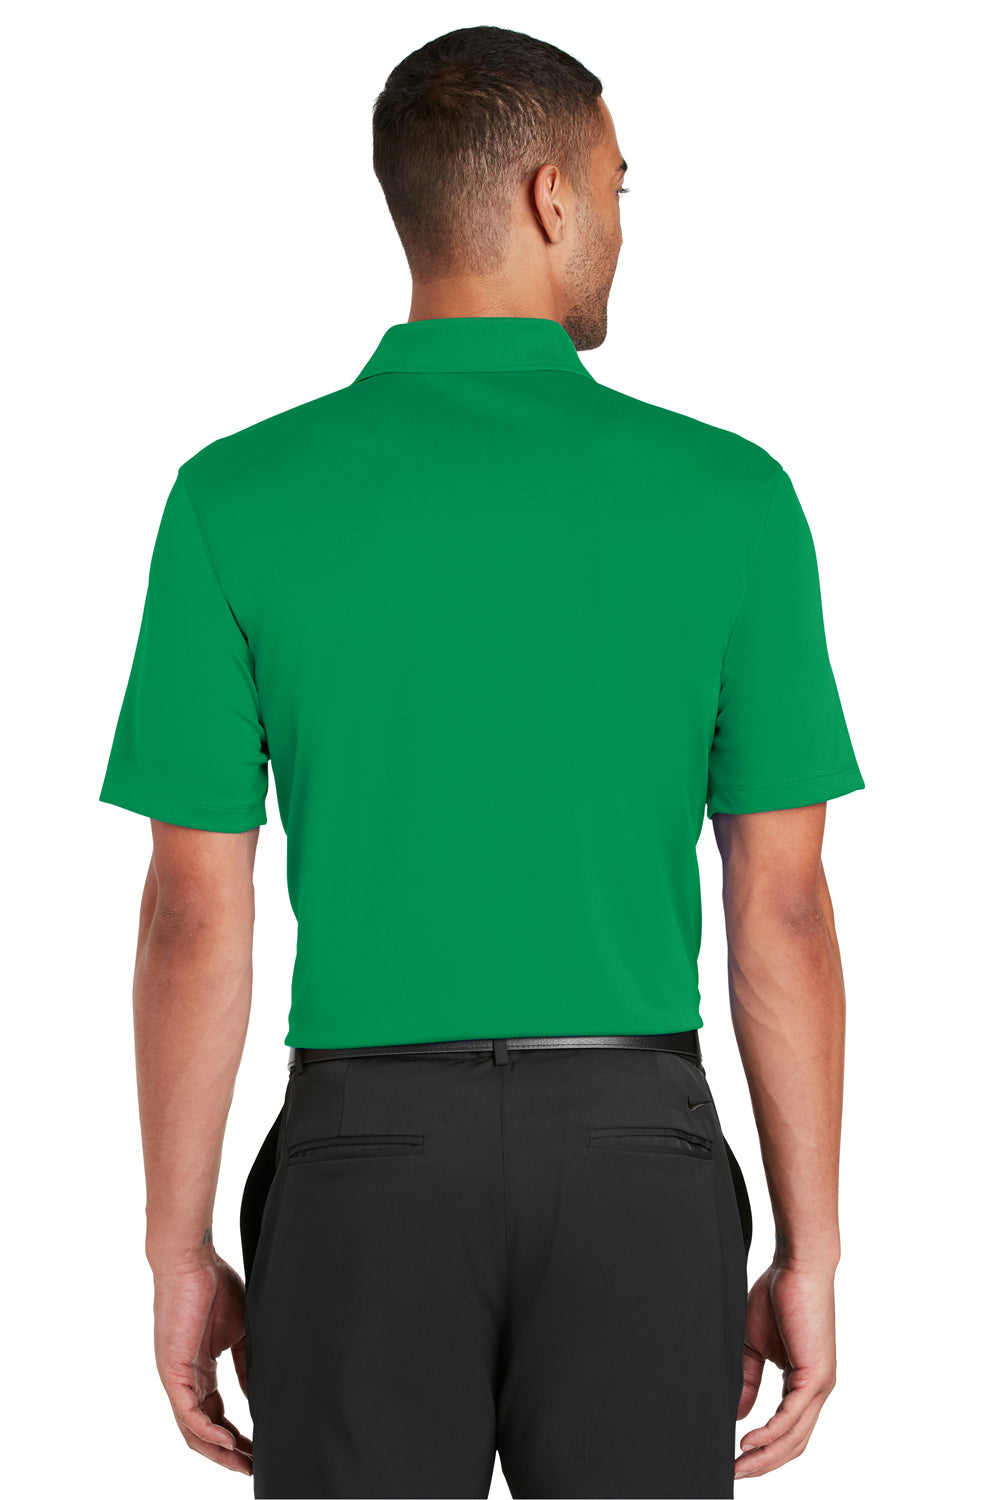 Nike 838956 Mens Players Dri-Fit Moisture Wicking Short Sleeve Polo Shirt Pine Green Model Back